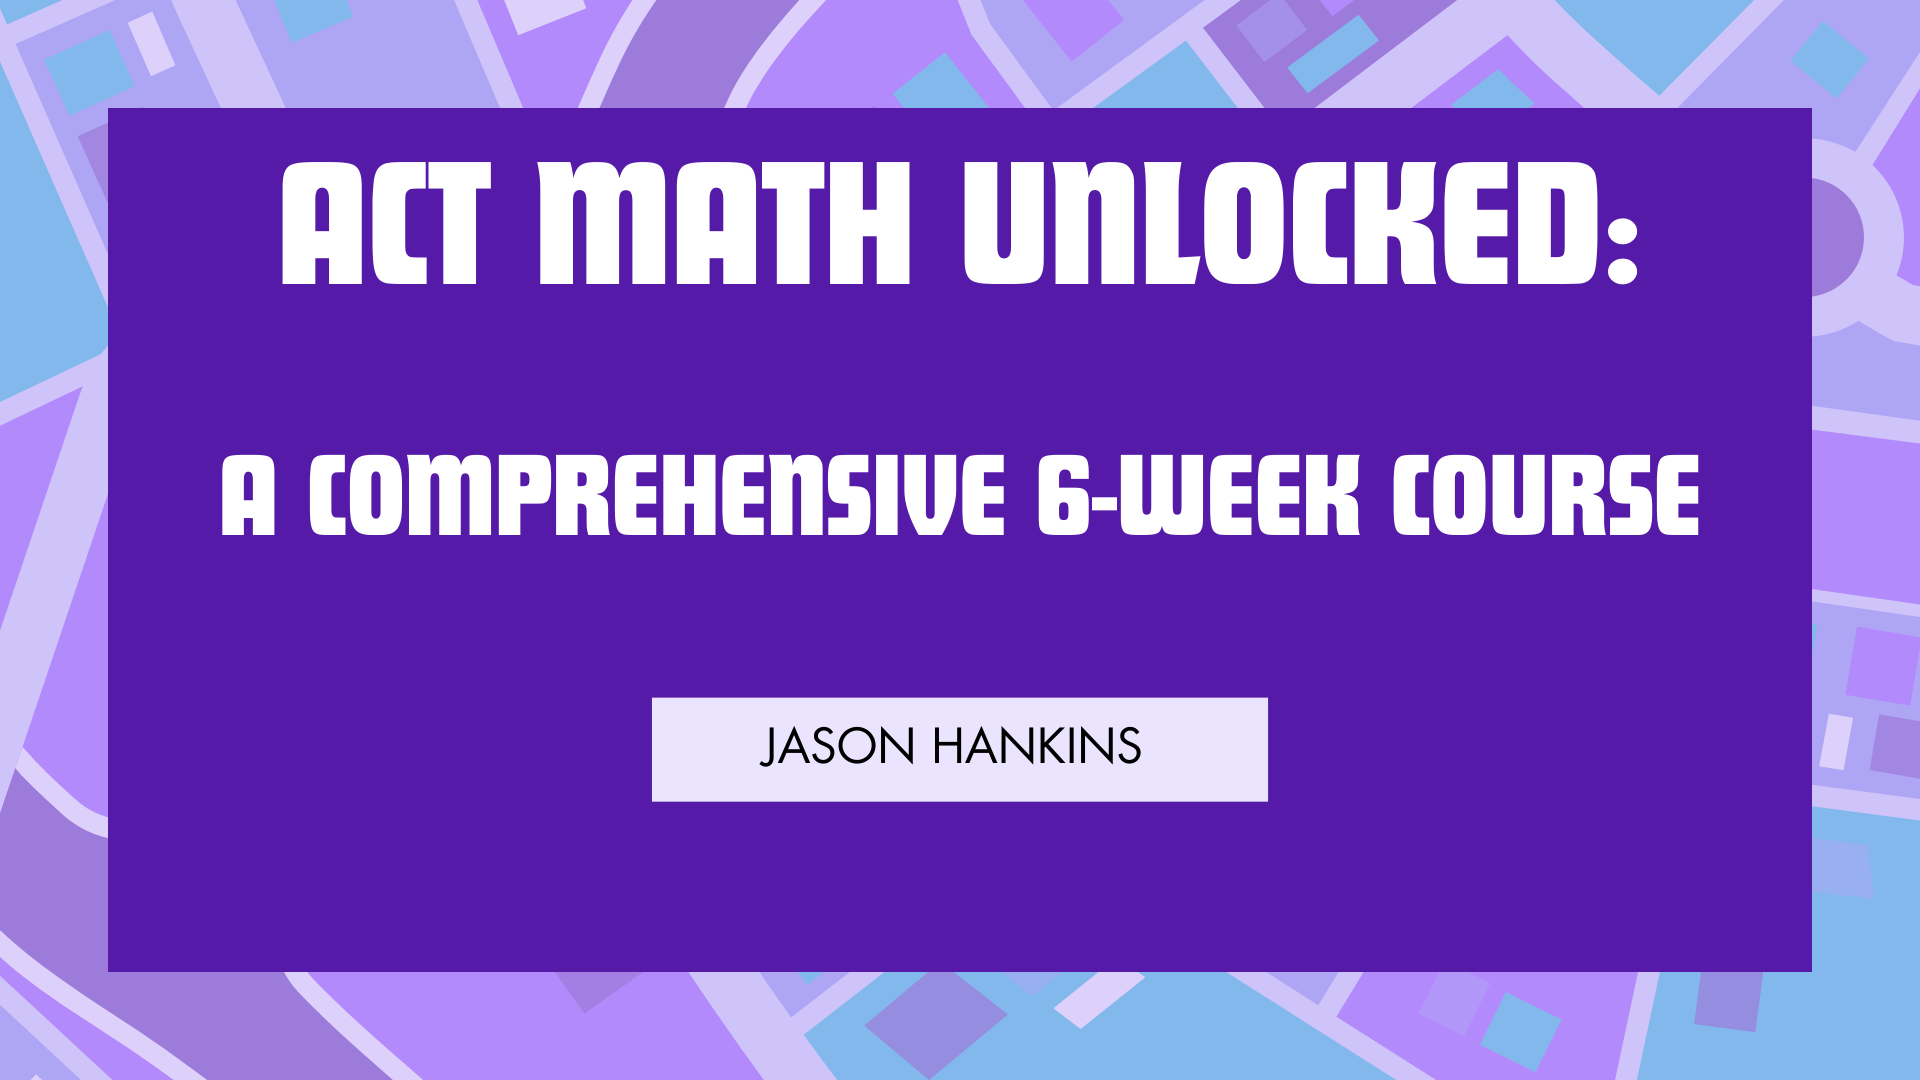 ACT Math Unlocked:A Comprehensive 6-Week Course